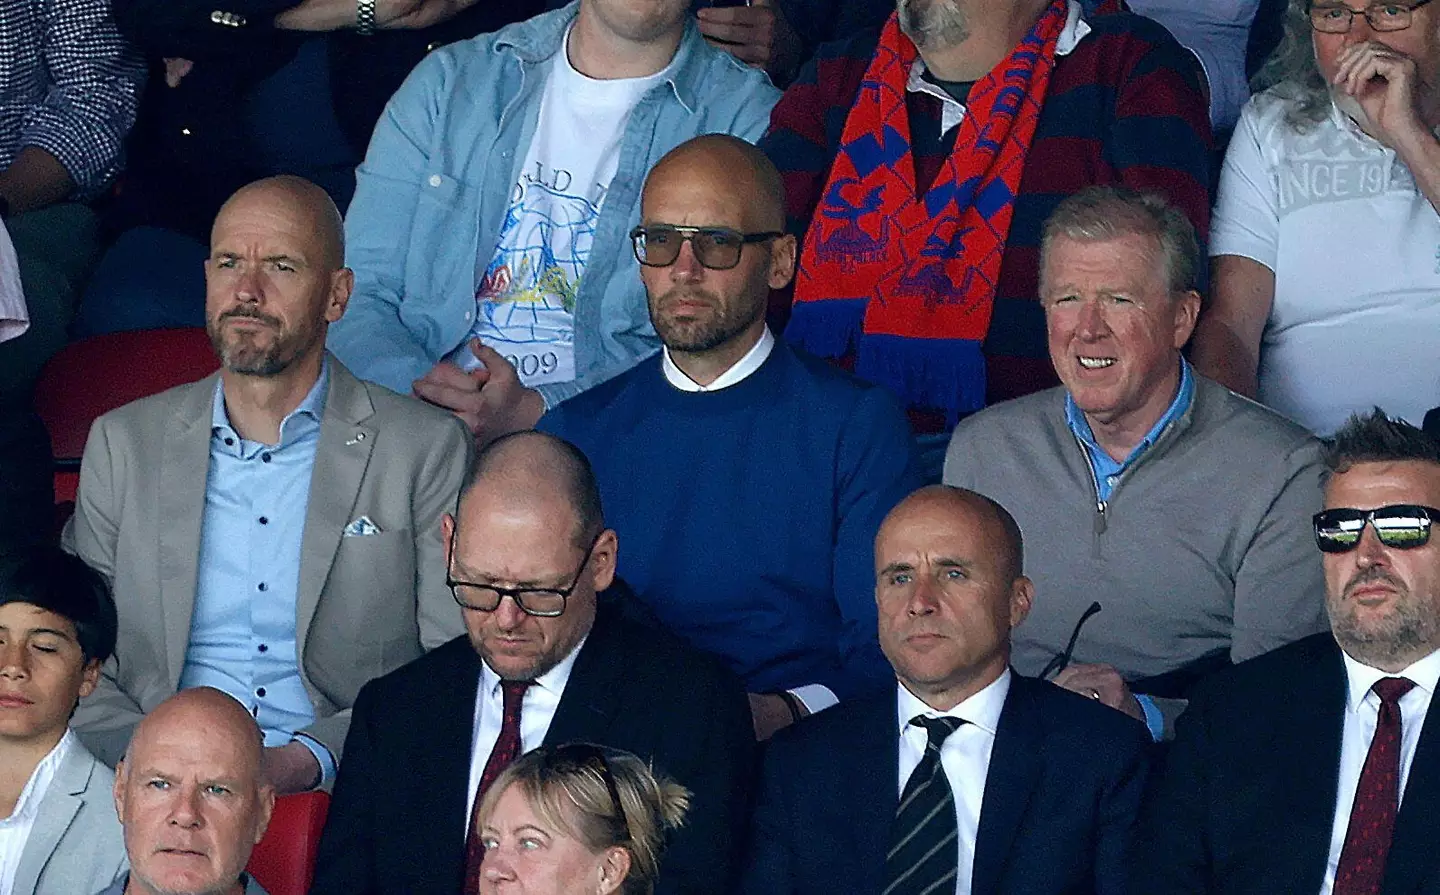 Erik ten Hag, Mitchell van der Gaag and Steve McClaren in attendance to watch Manchester United face Crystal Palace at Selhurst Park last season. (Alamy)